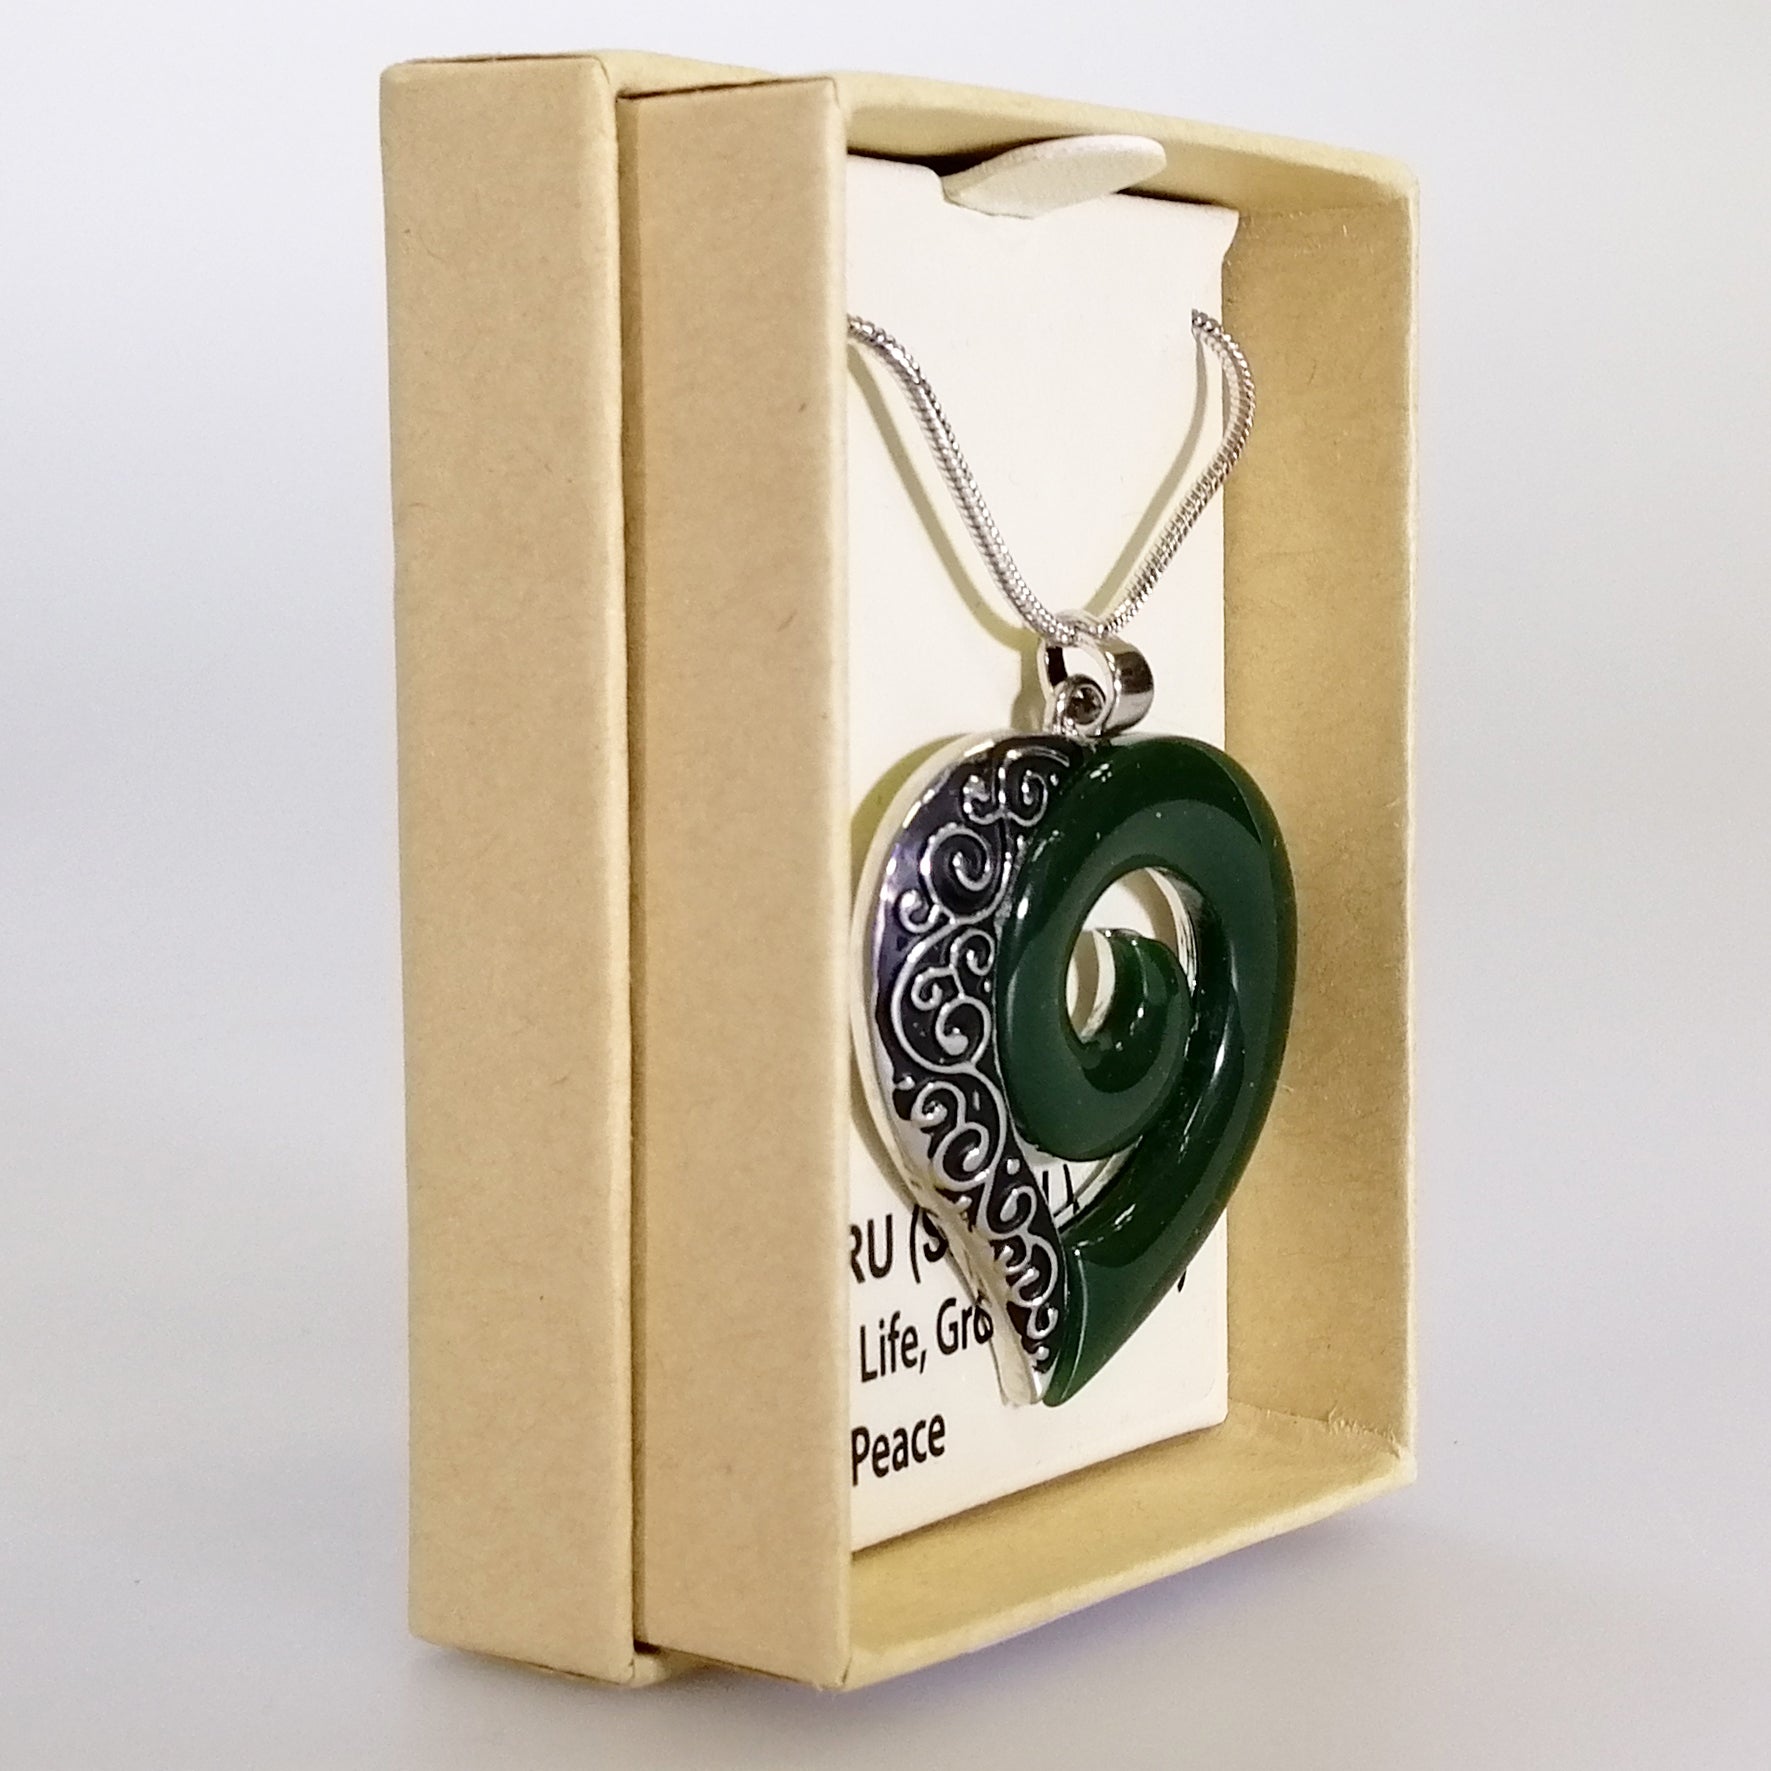 Kiwicraft - Jade Green Koru Heart Necklace